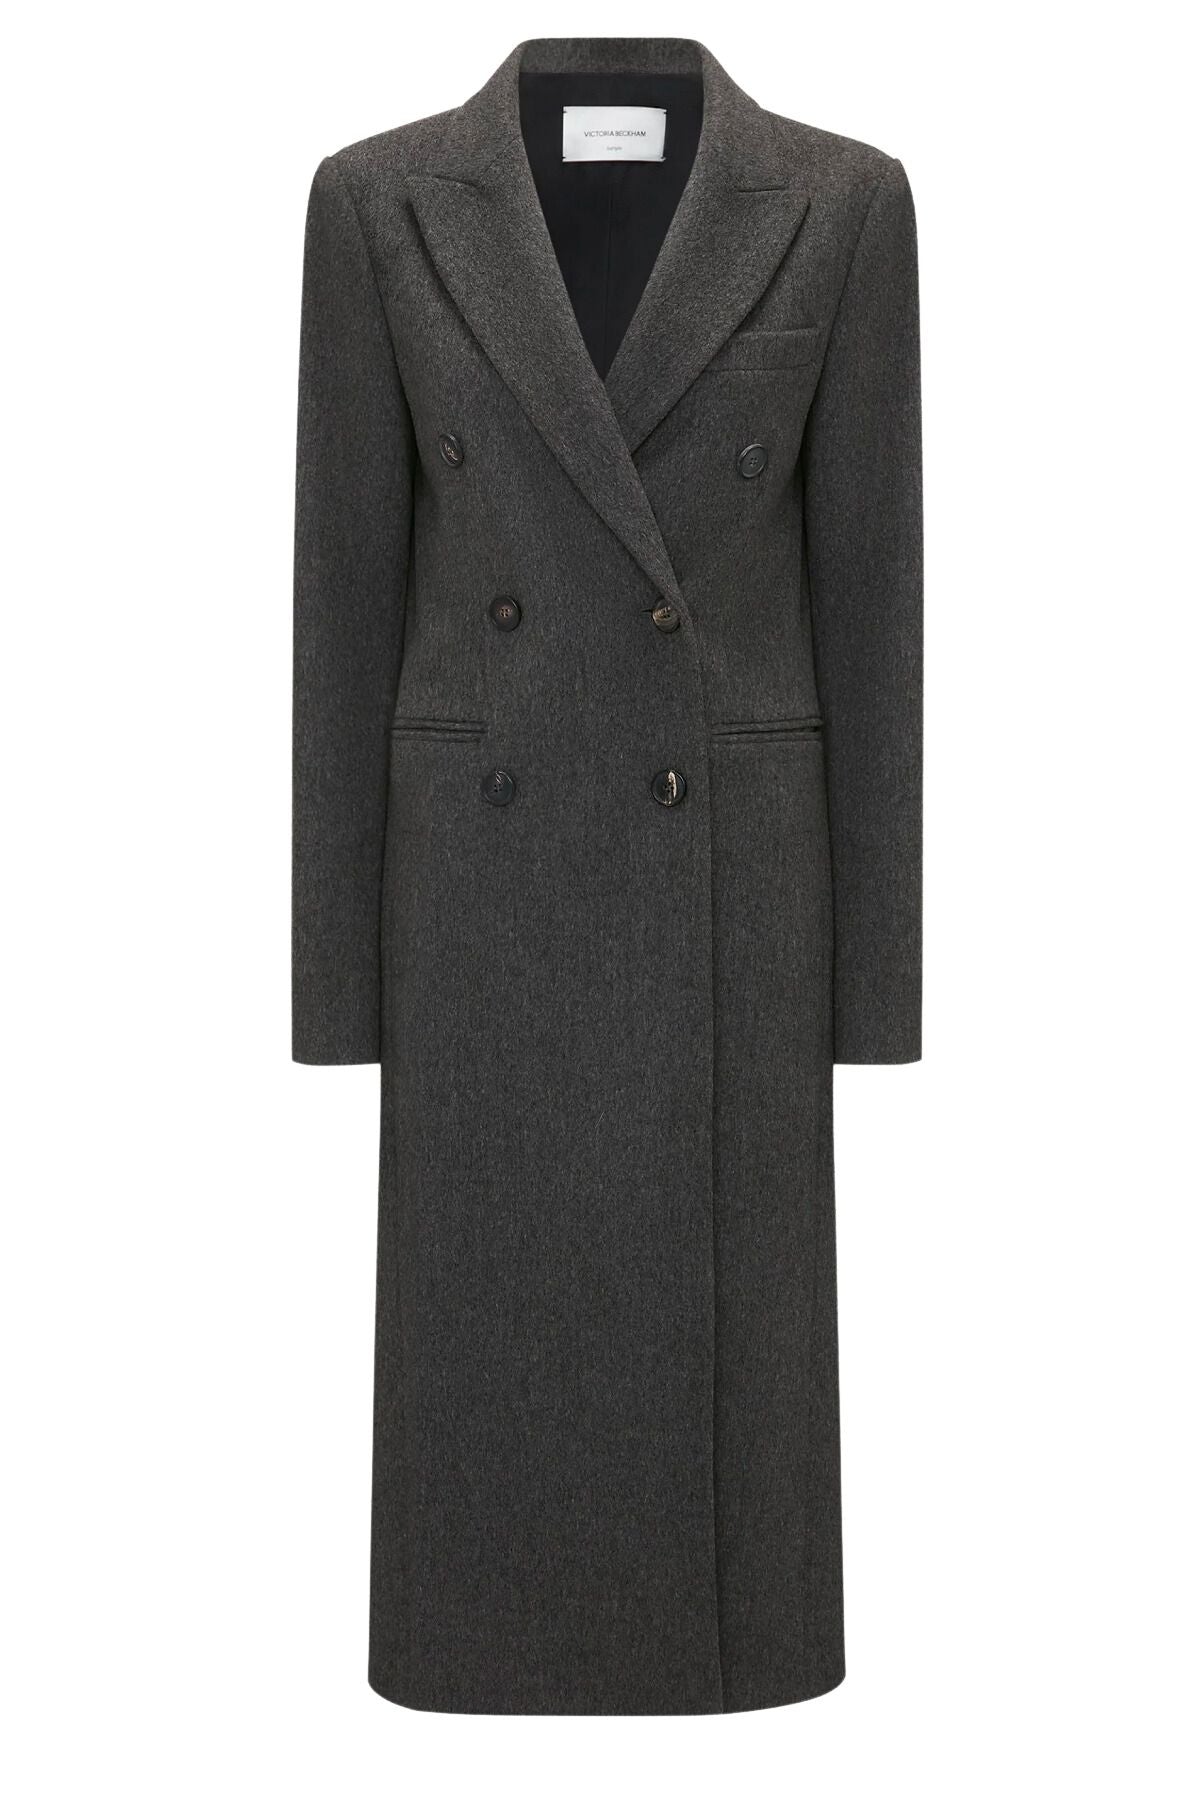 Victoria Beckham Tailored Slim Coat - Grey Melange